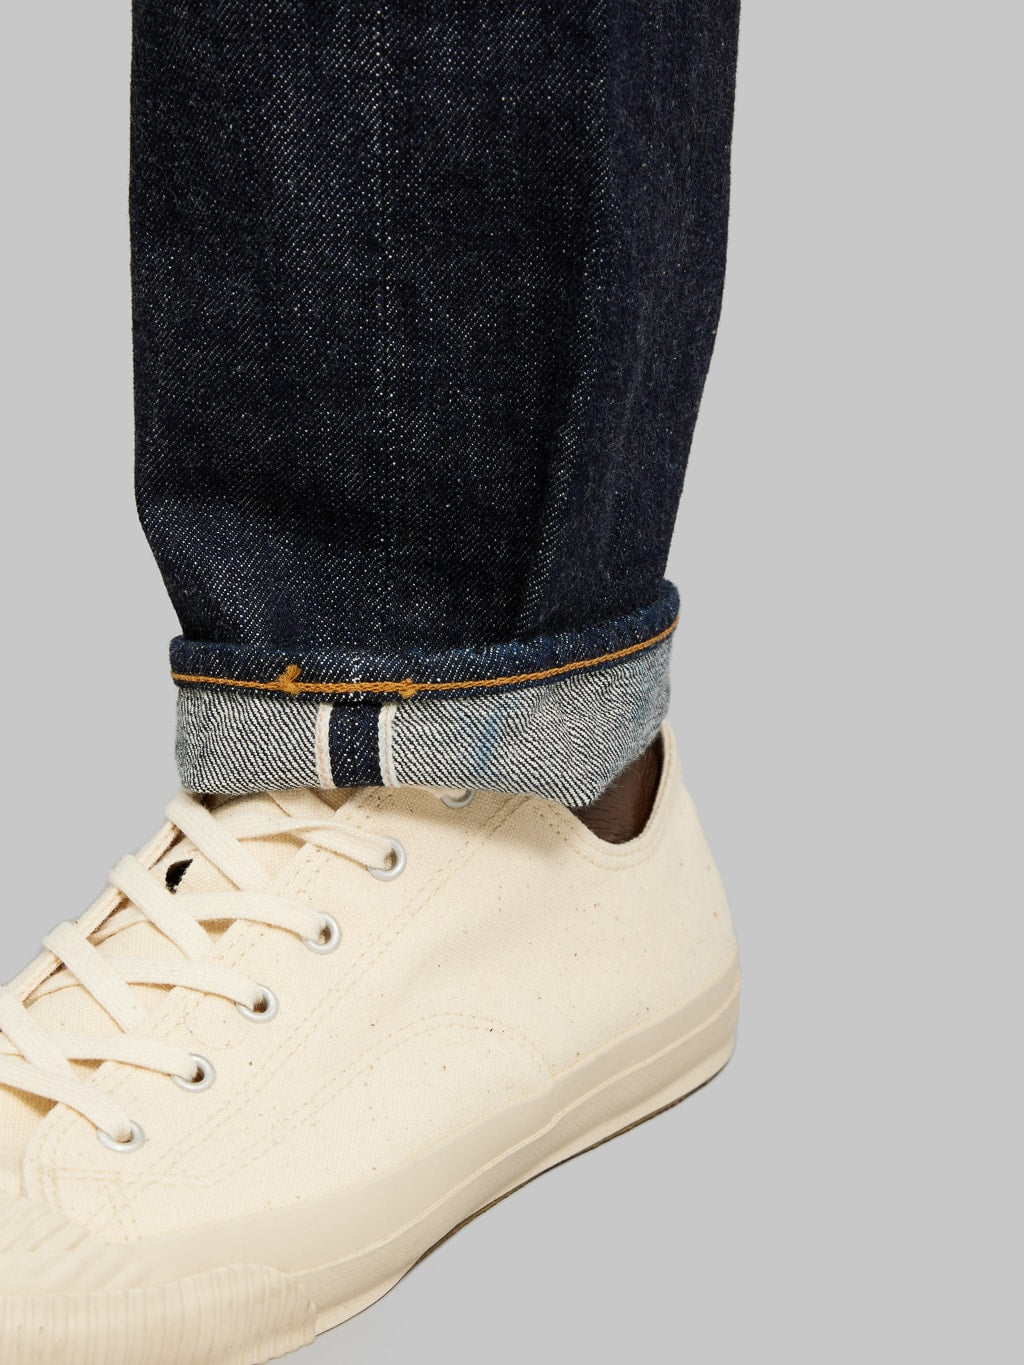 tcb jeans slim 50s selvedge japanese denim selvedge closeup